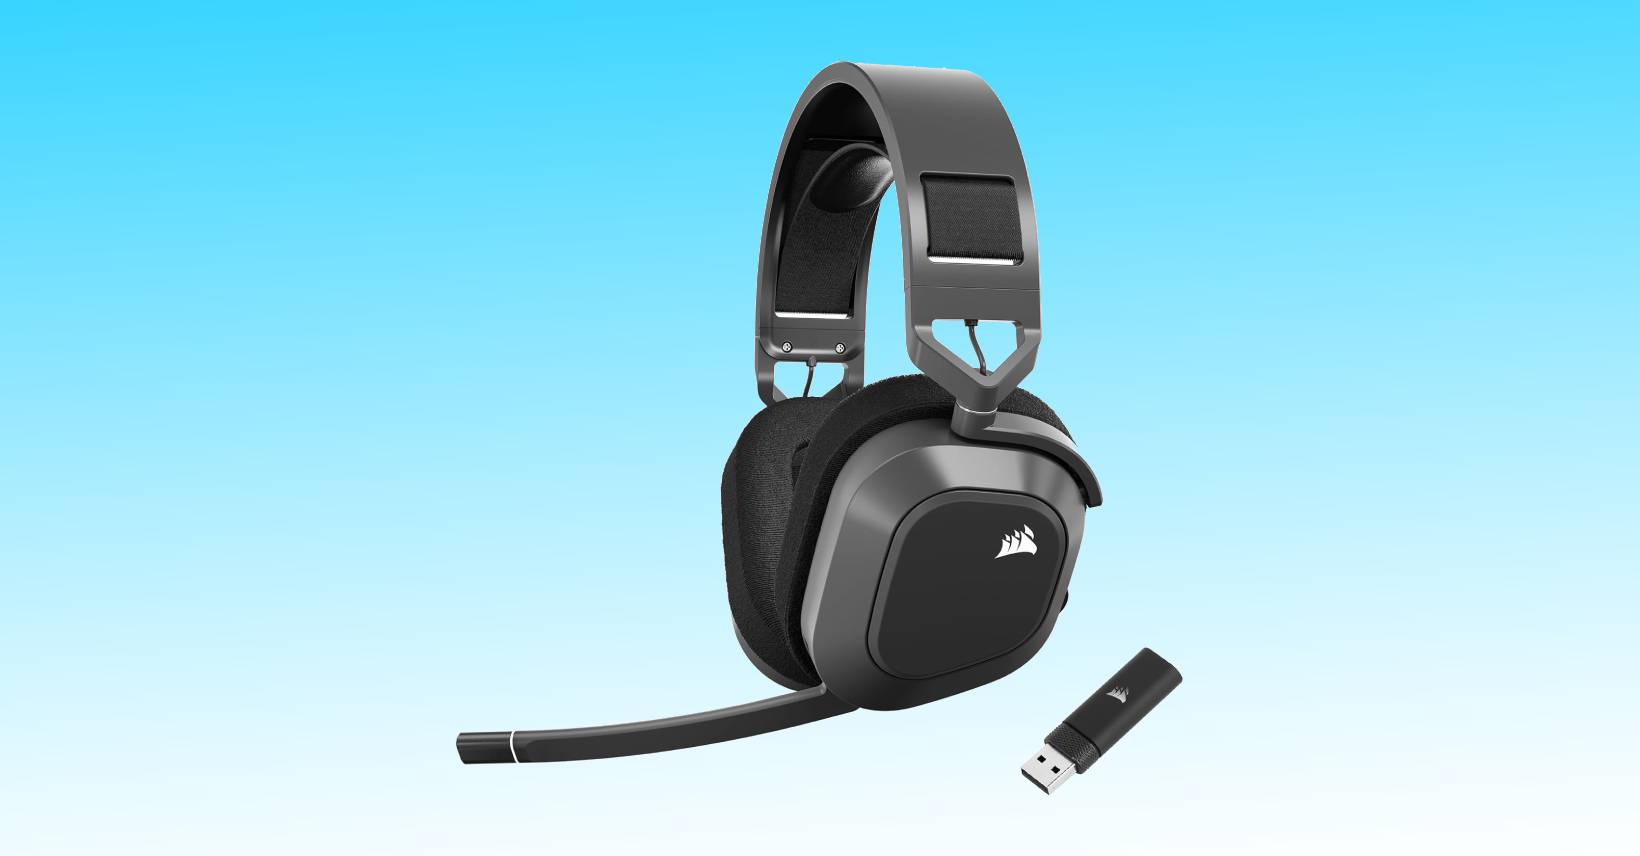 Corsair HS80 RGB Wireless Black Headband Headset for Gaming for